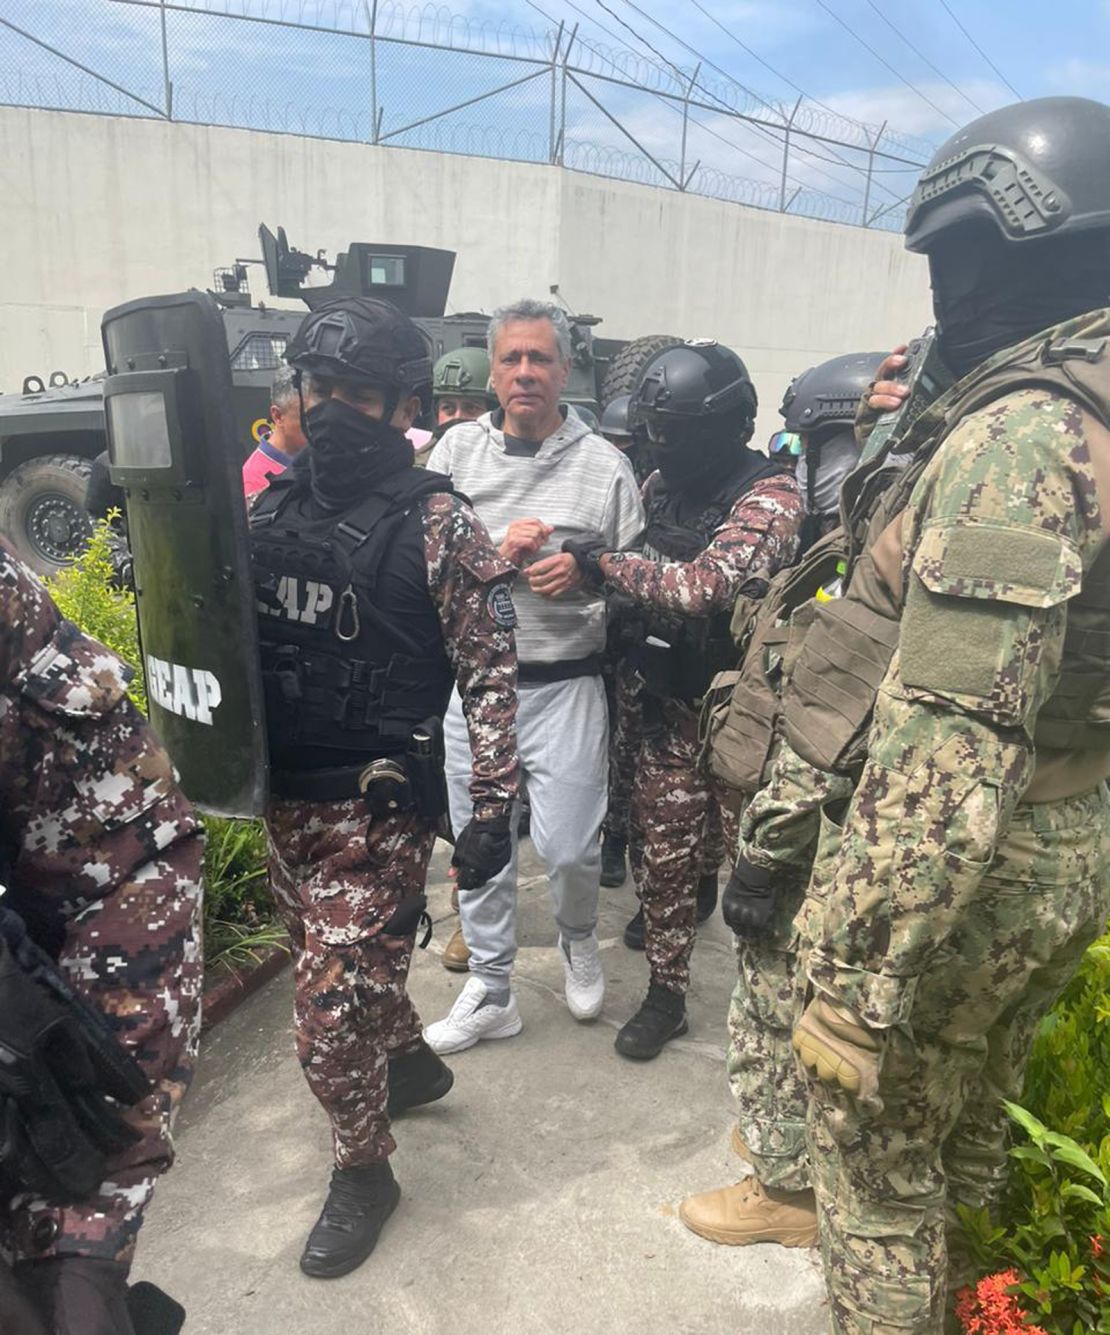 Police detain Glas in Quito, Ecuador on April 6.